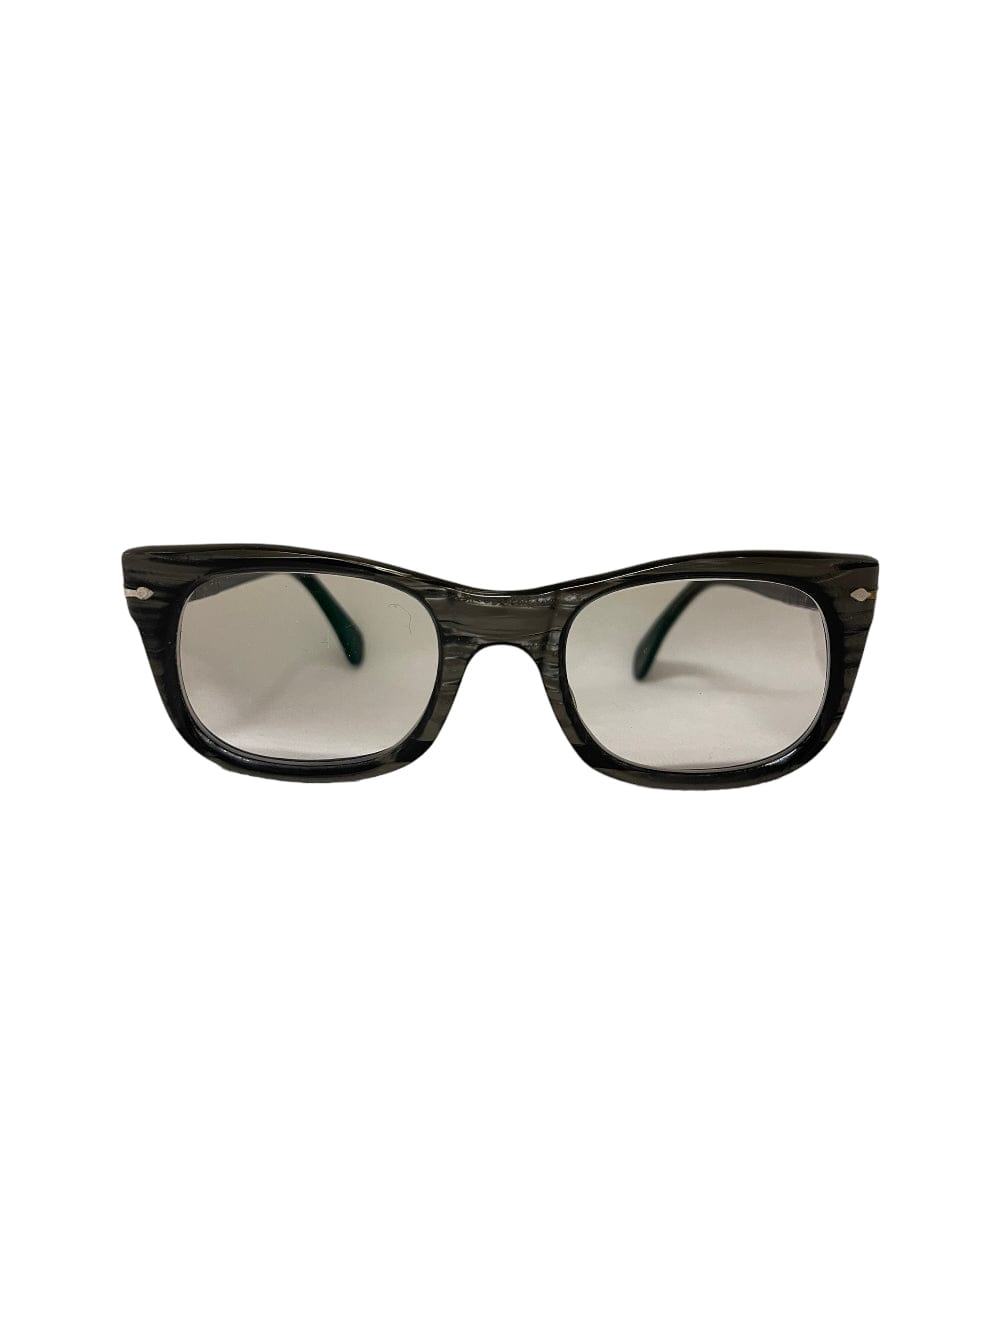 Meflecto - Havana Grey Sunglasses